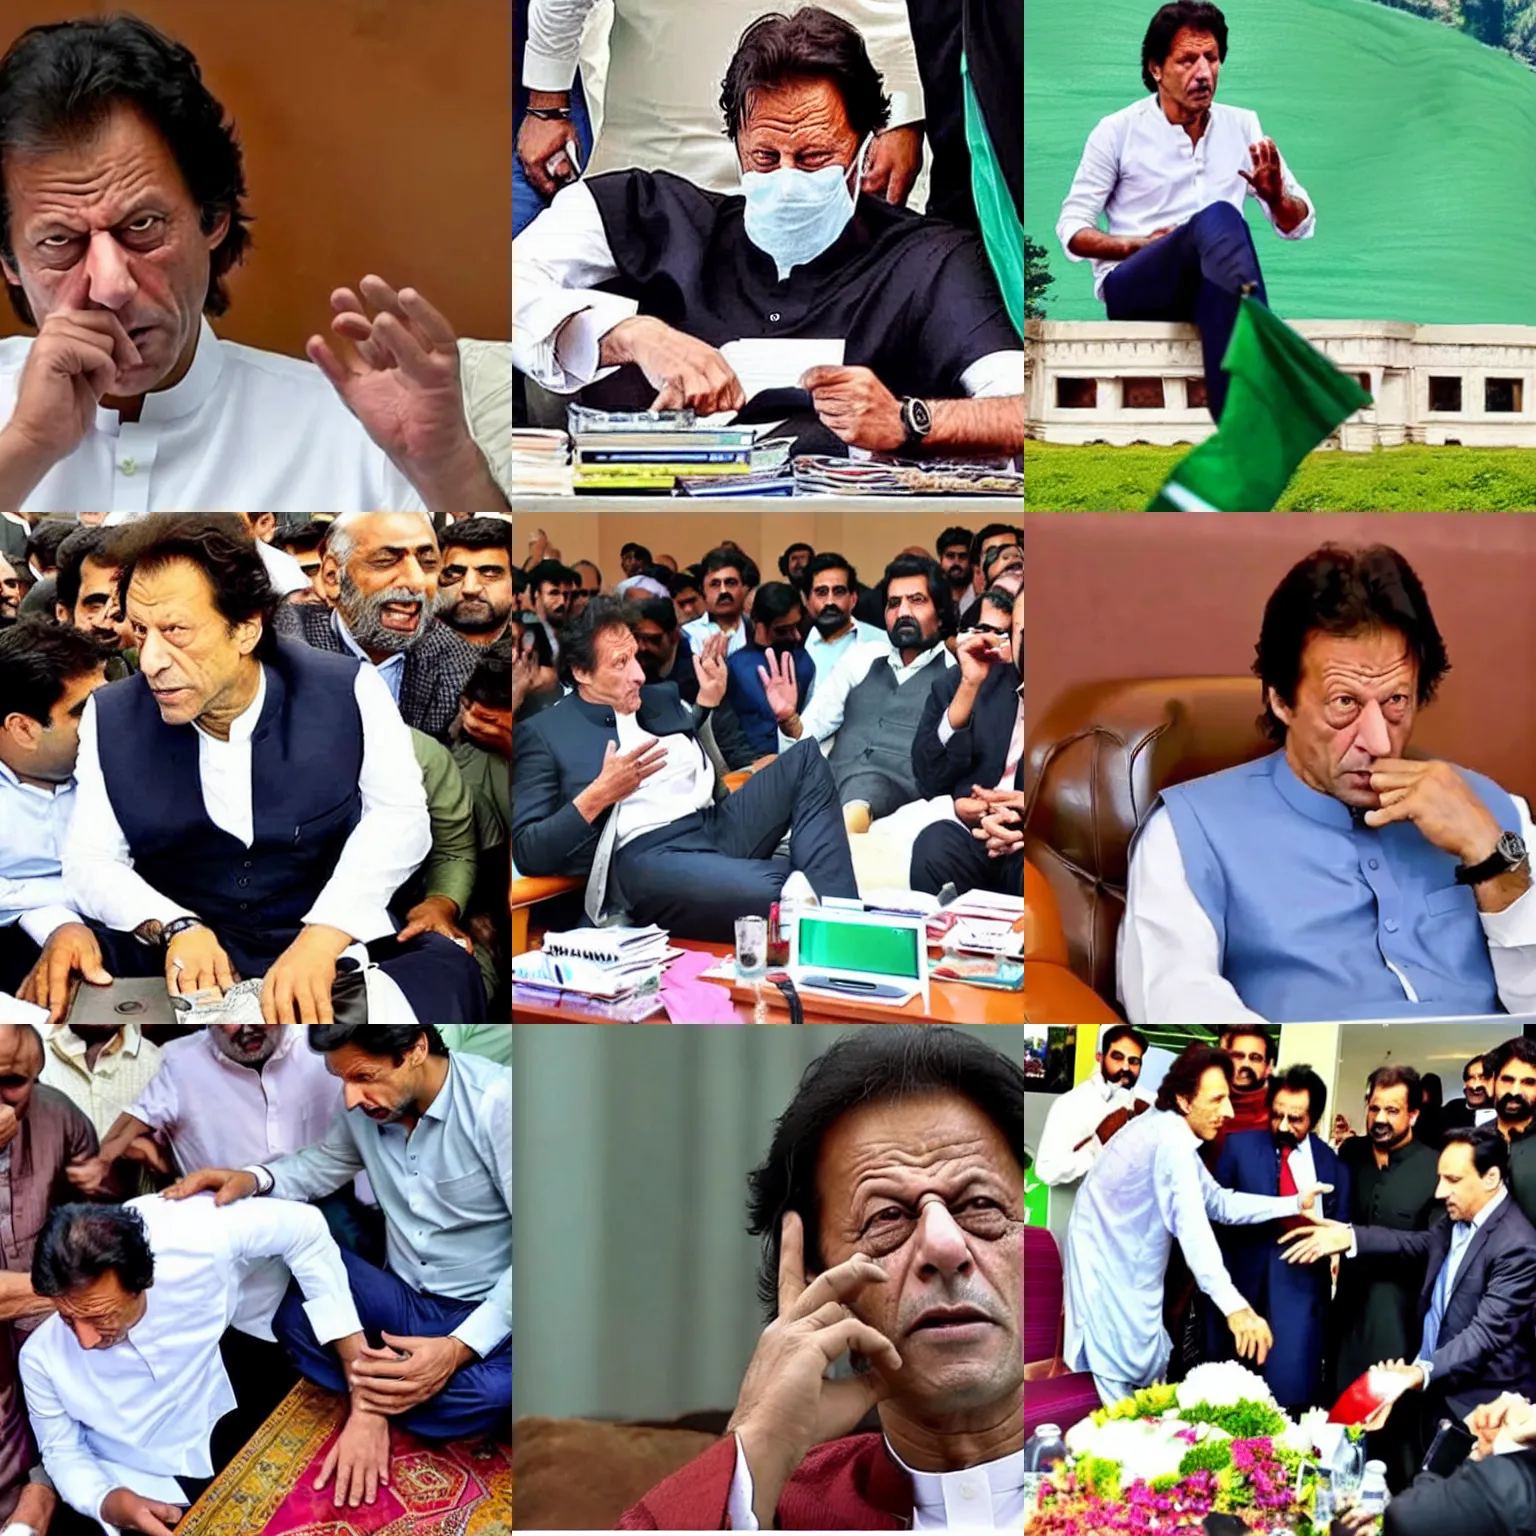 Prompt: Imran Khan having a mental breakdown over falling economy